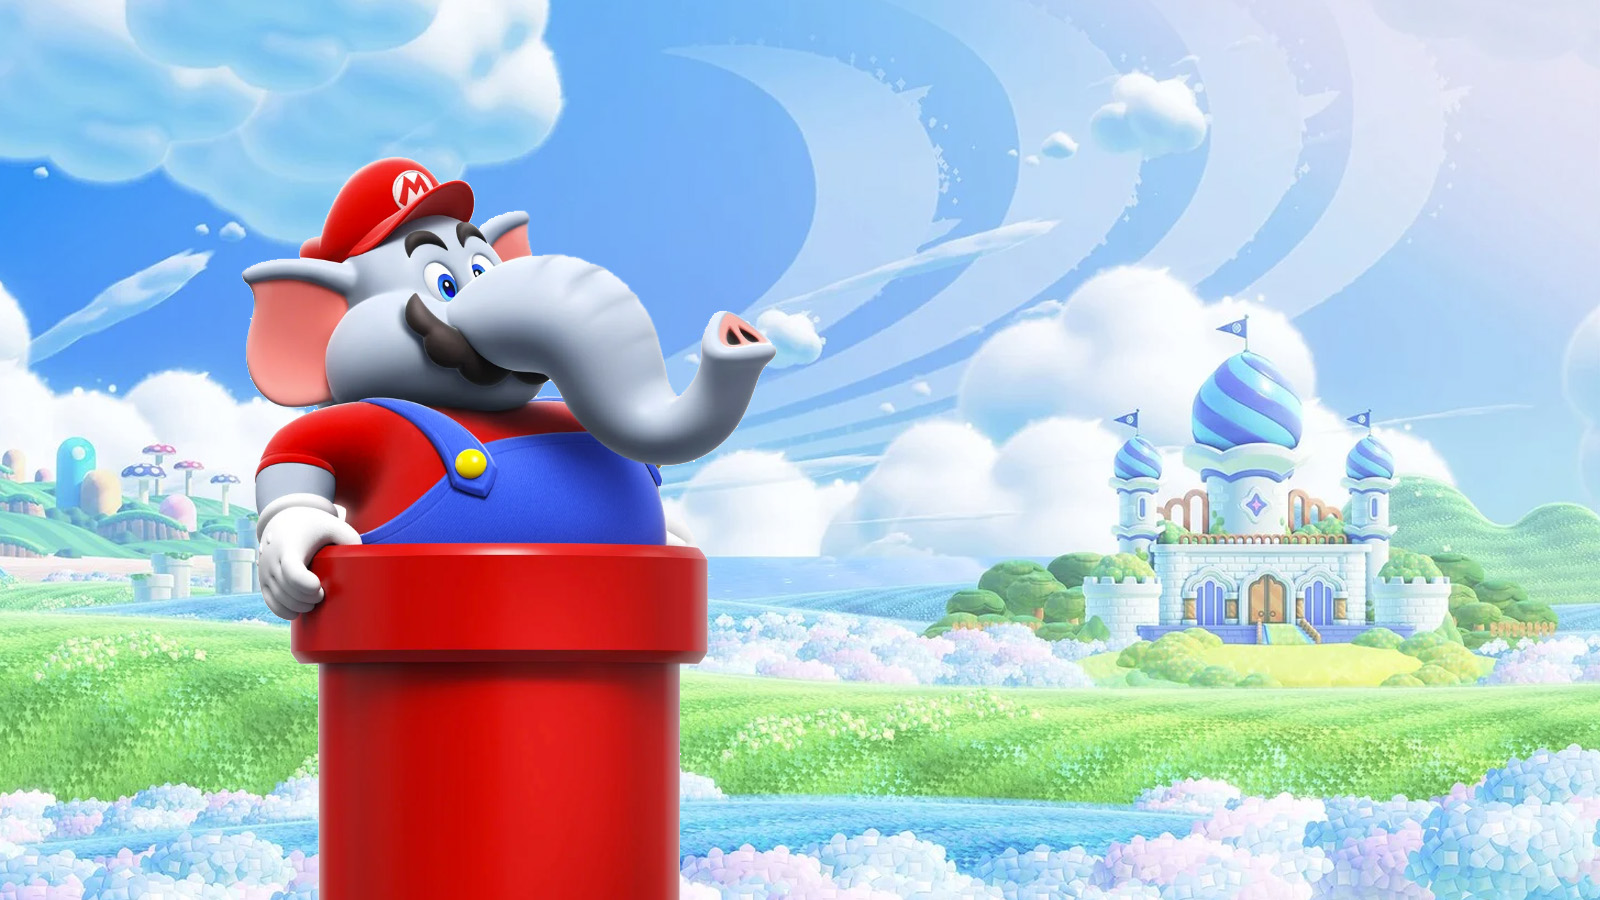 Super Mario Wonder fan art : r/NintendoSwitch